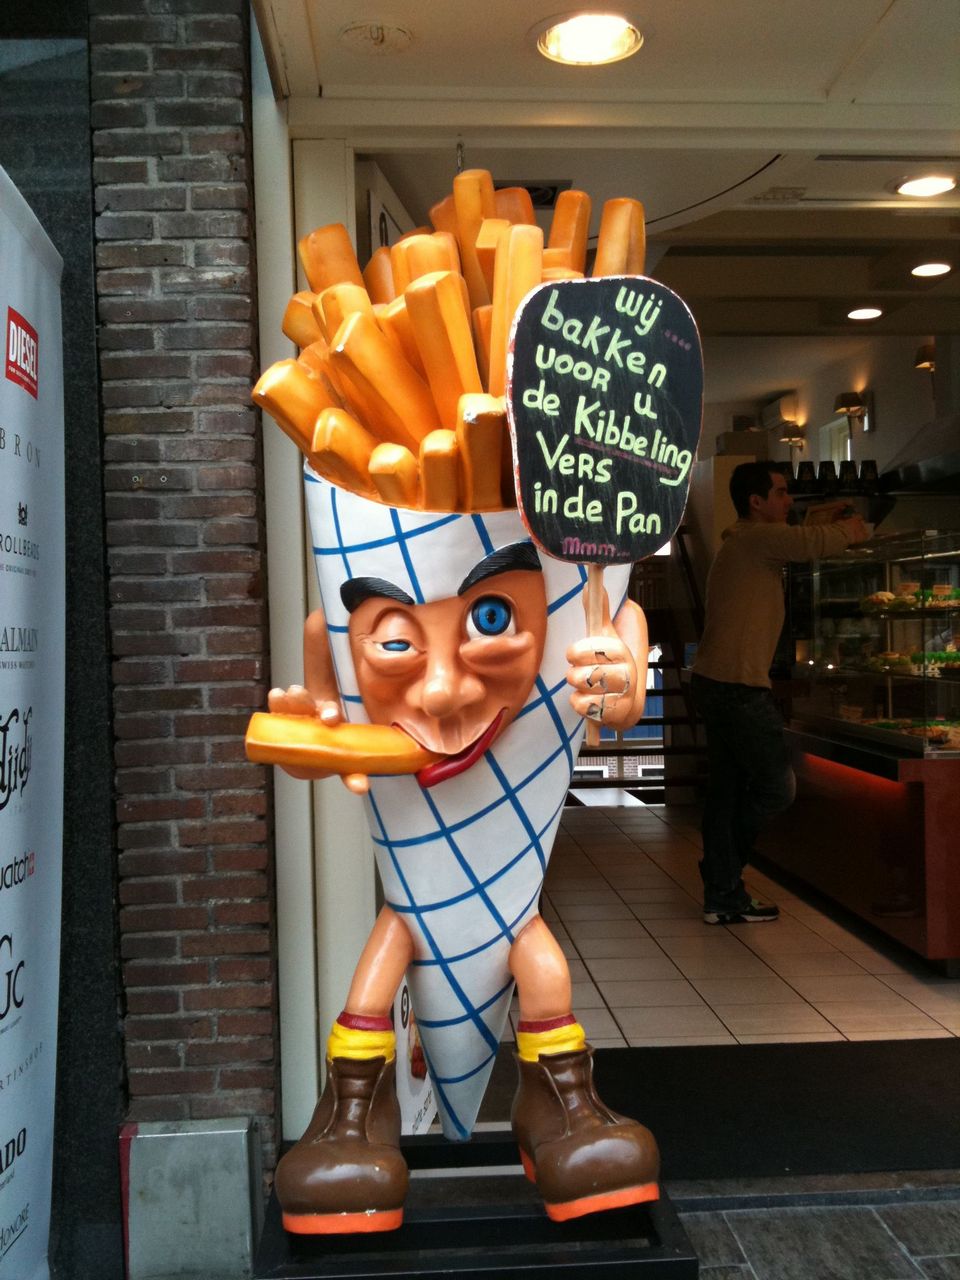 dutch french fries chip amsterdam (1),amsterdam blog,amsterdam travel blog,amsterdam travel guide blog,amsterdam city guide